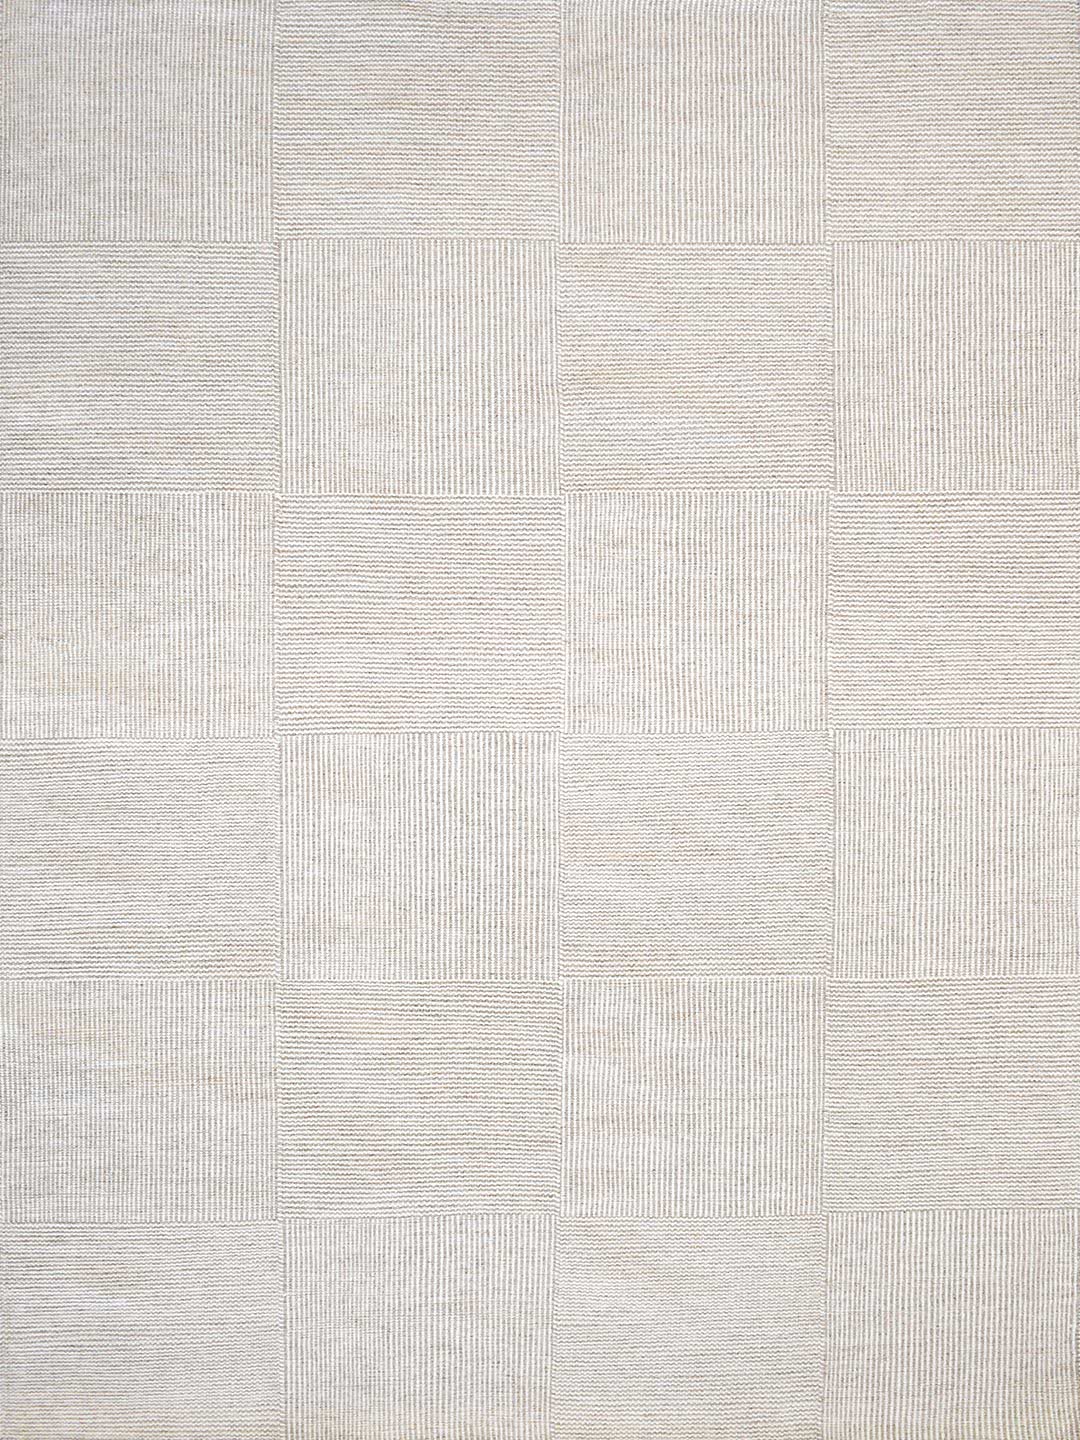 Braid Box Natural flatweave rug in beige and white, handmade from 100% wool